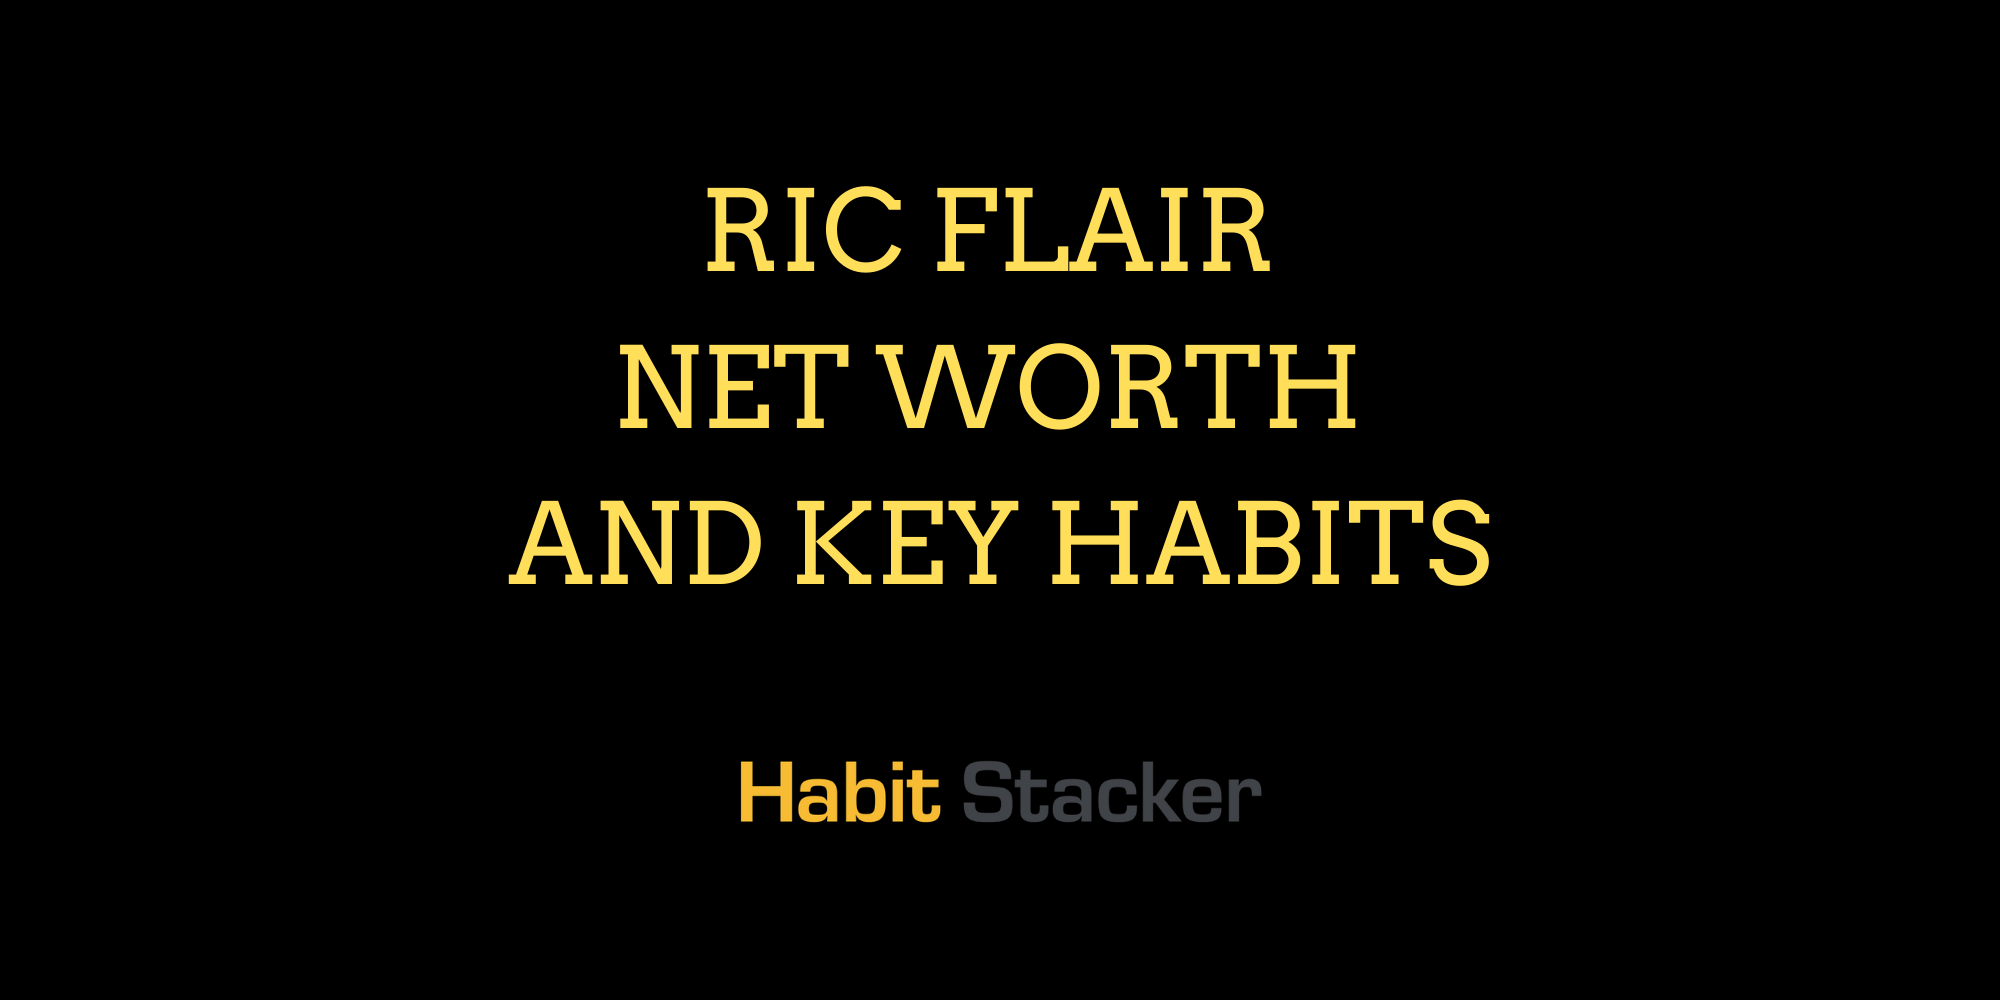 Ric Flair Net Worth and Key Habits